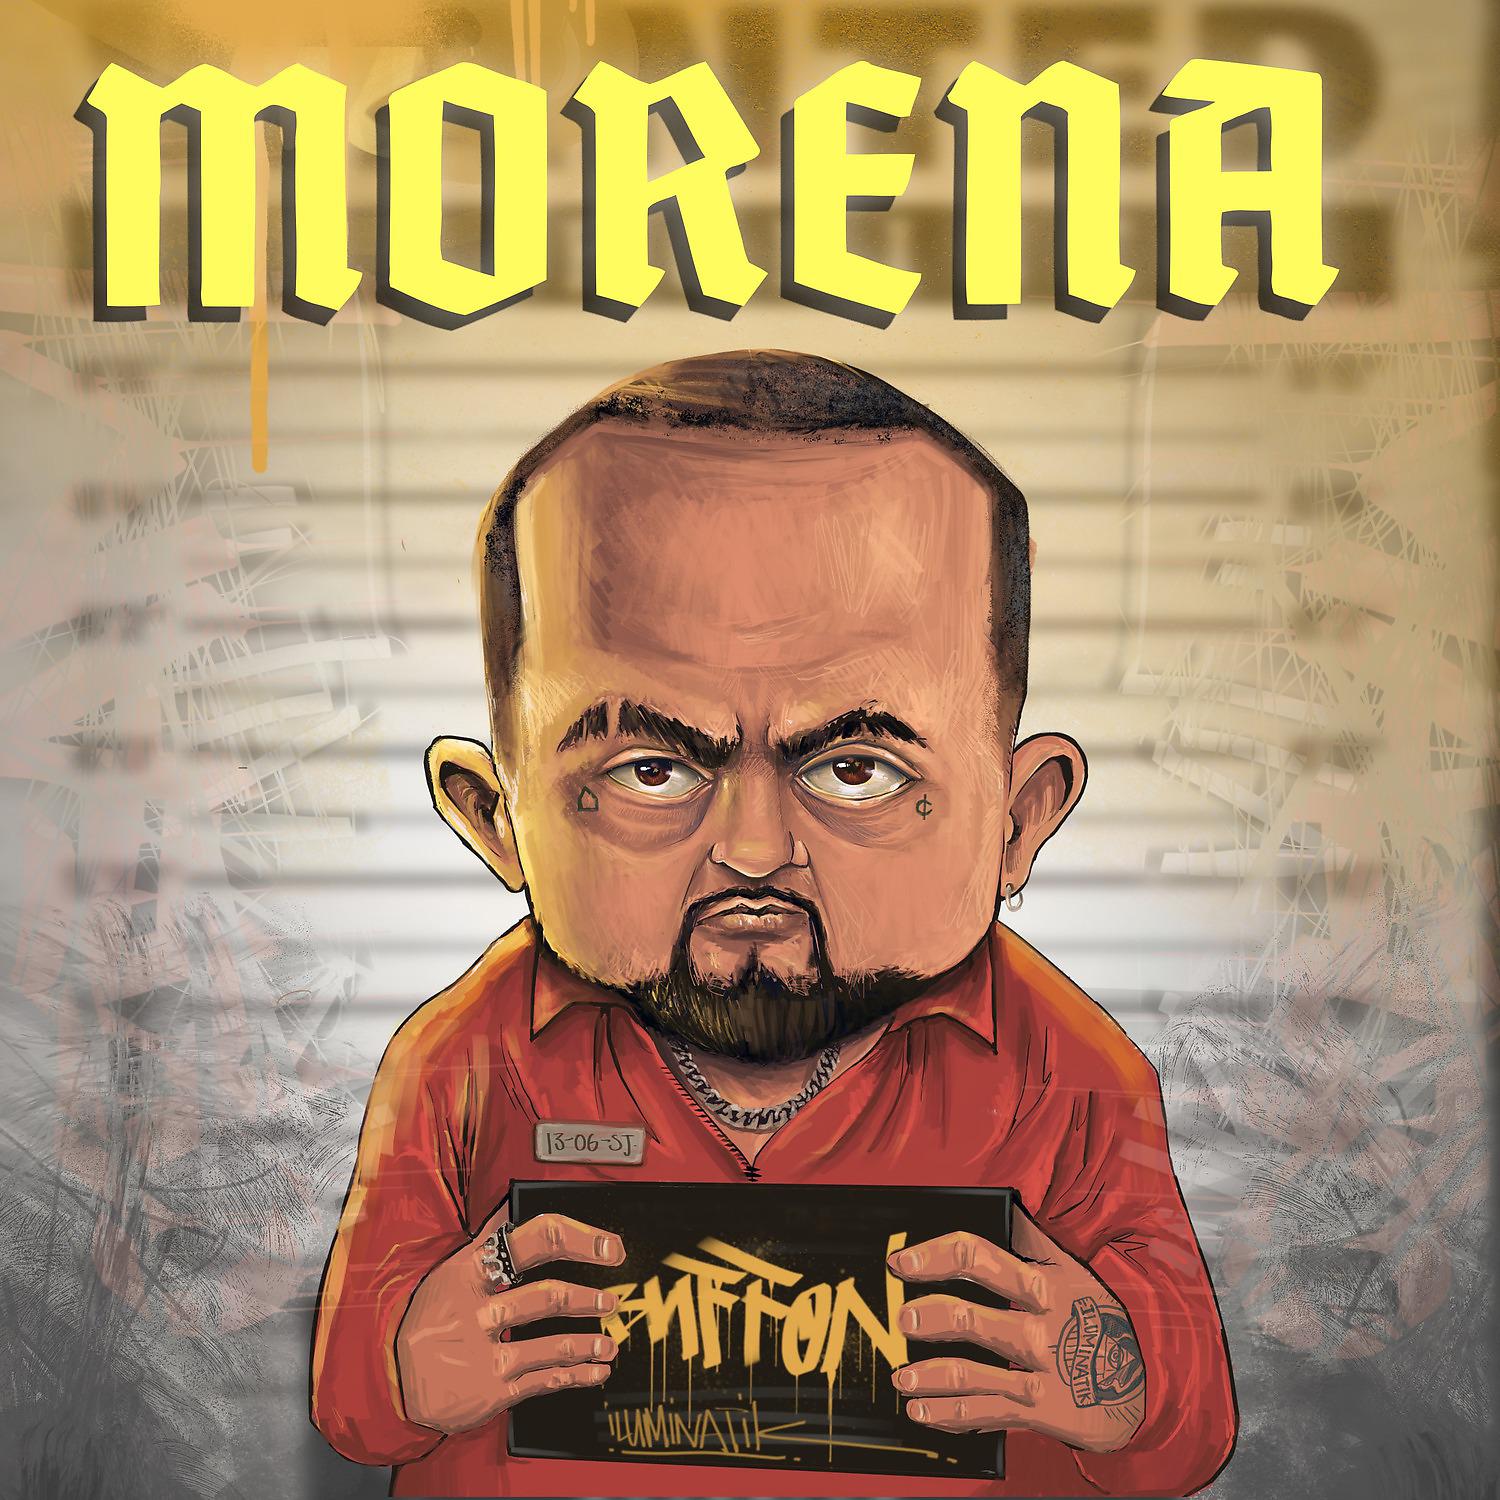 Постер альбома Morena